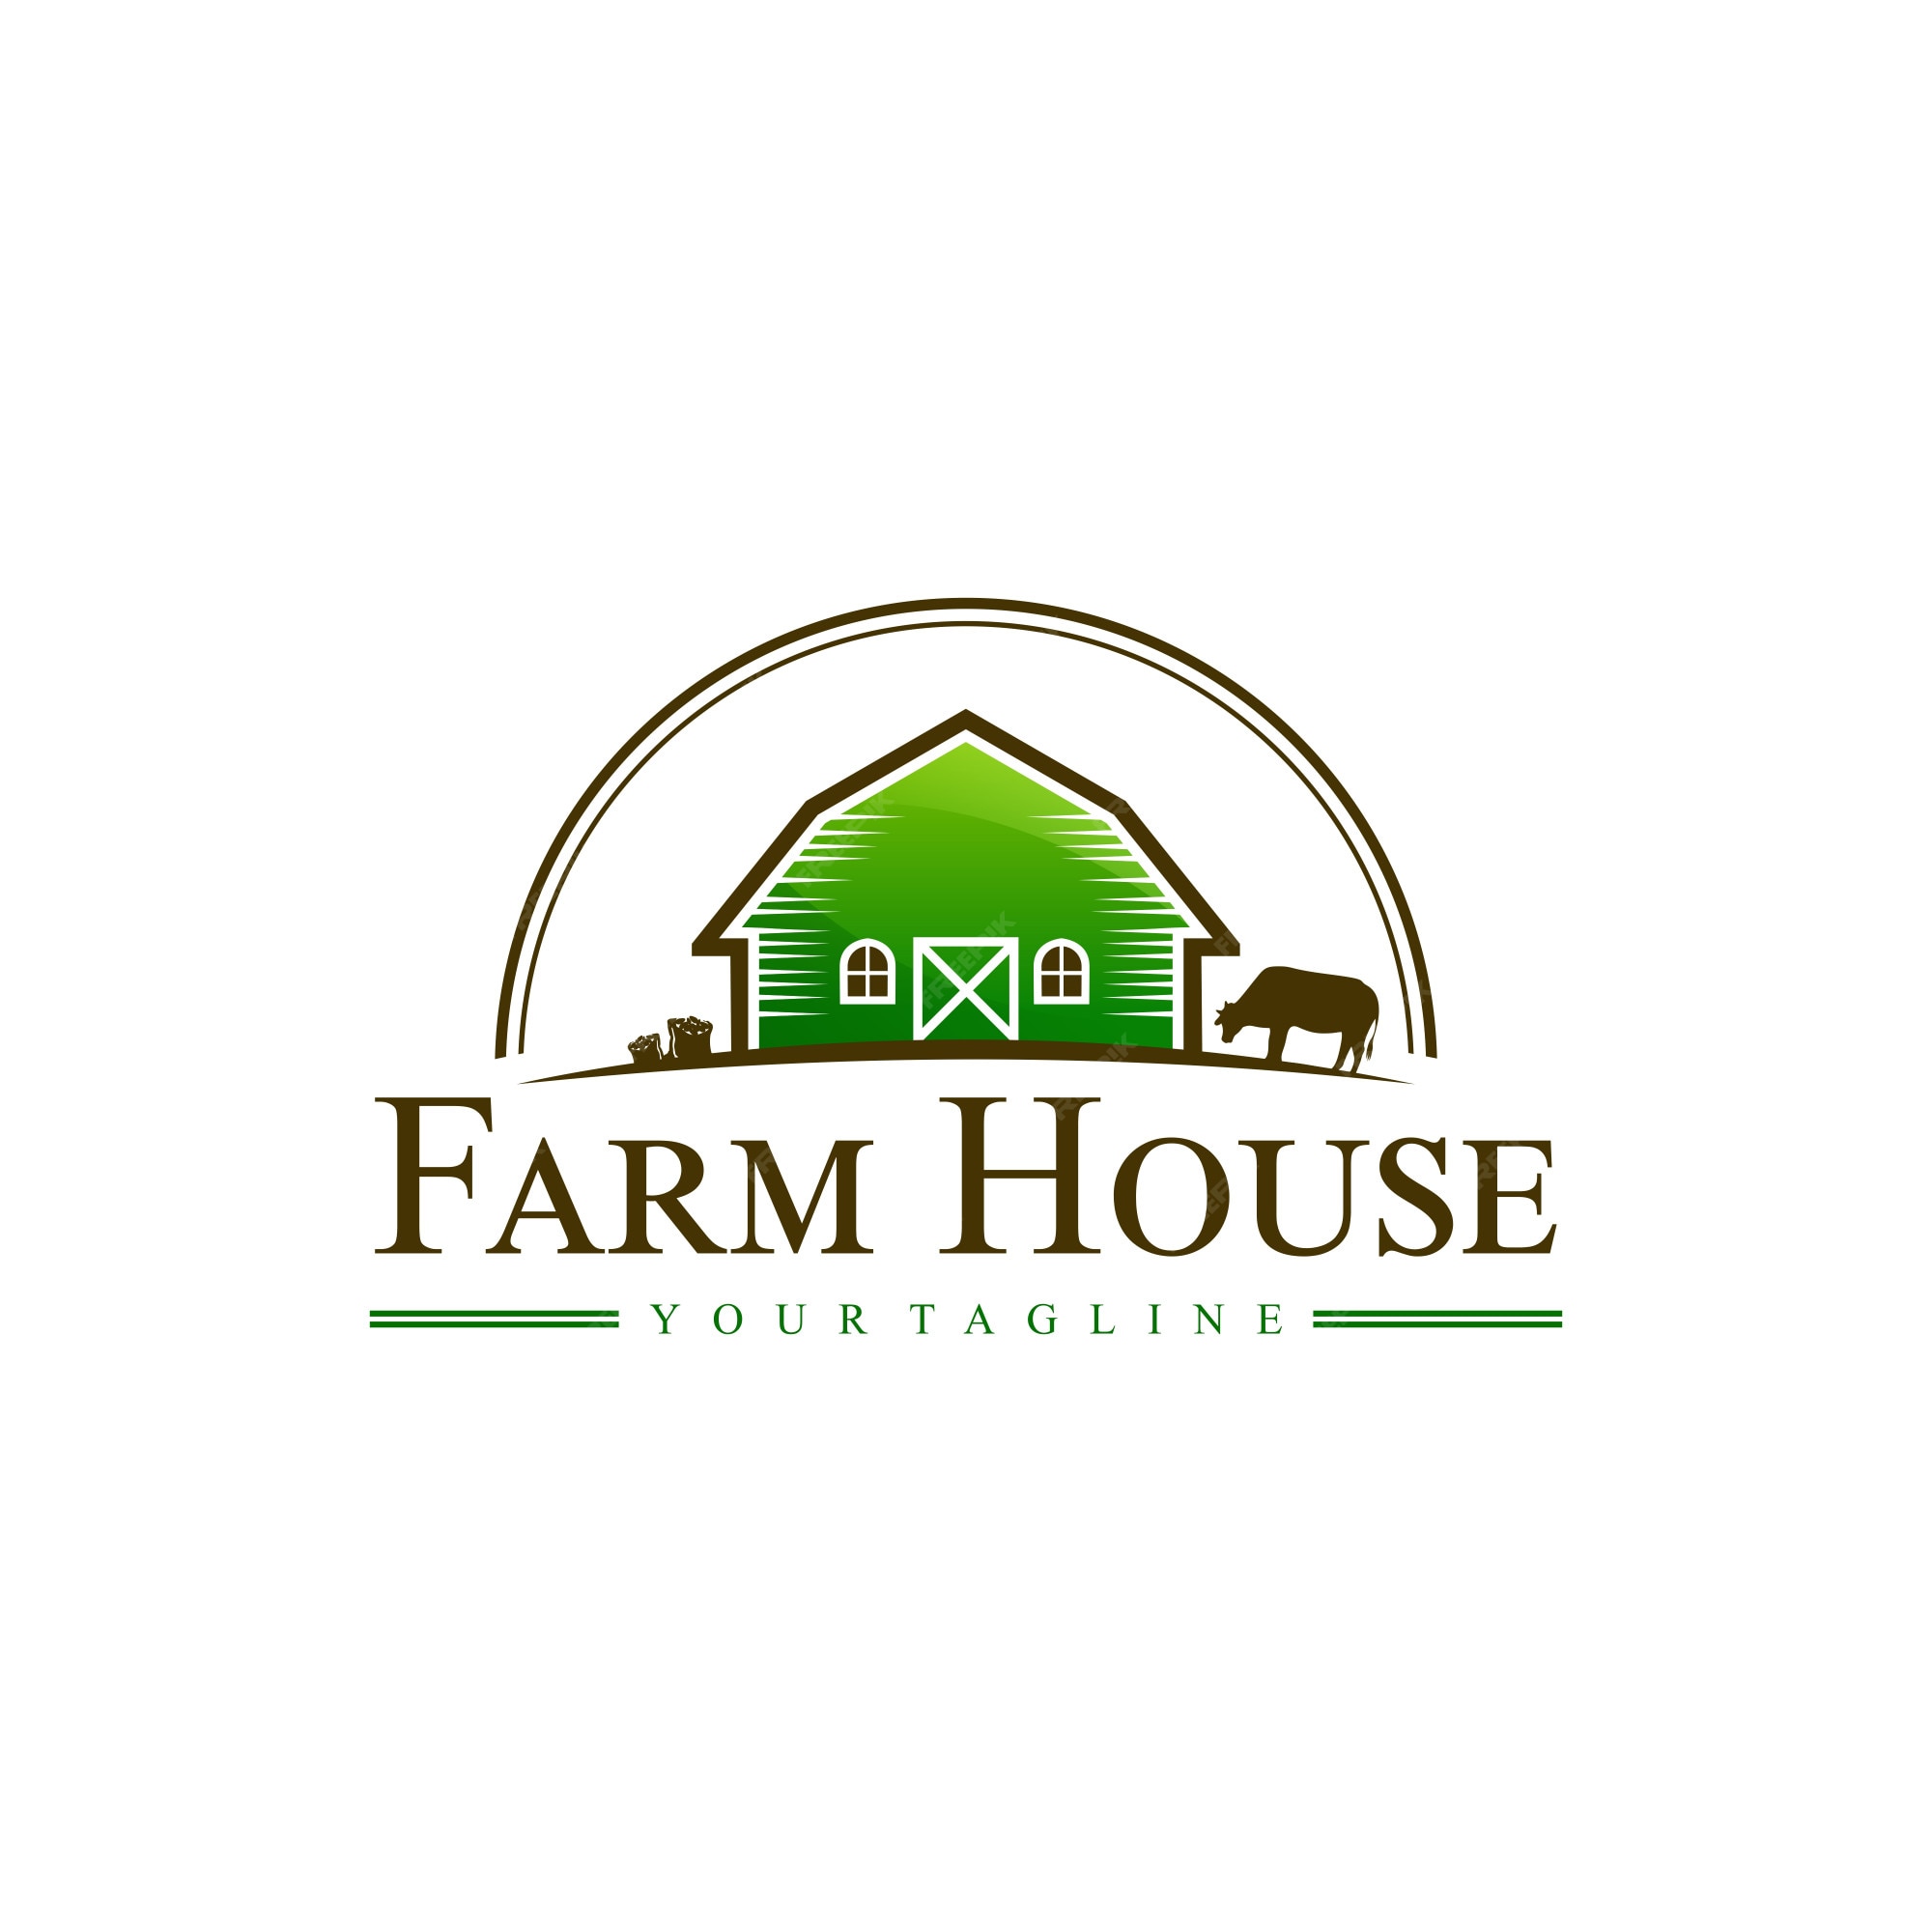 Premium Vector | Farm house logo design illustration